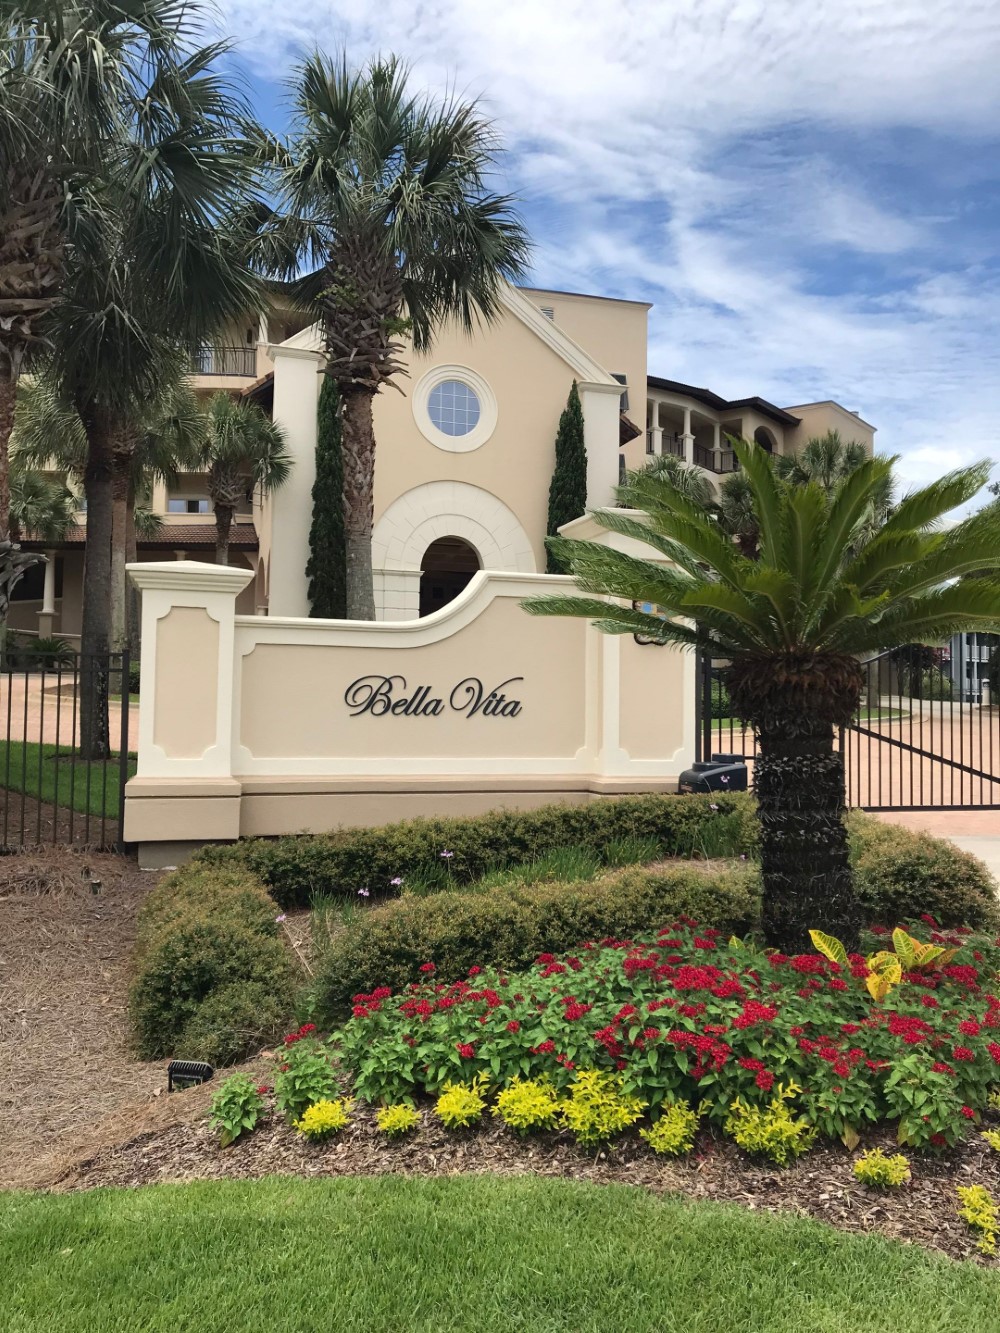 Bella Vita Condominiums in Santa Rosa Beach, FL